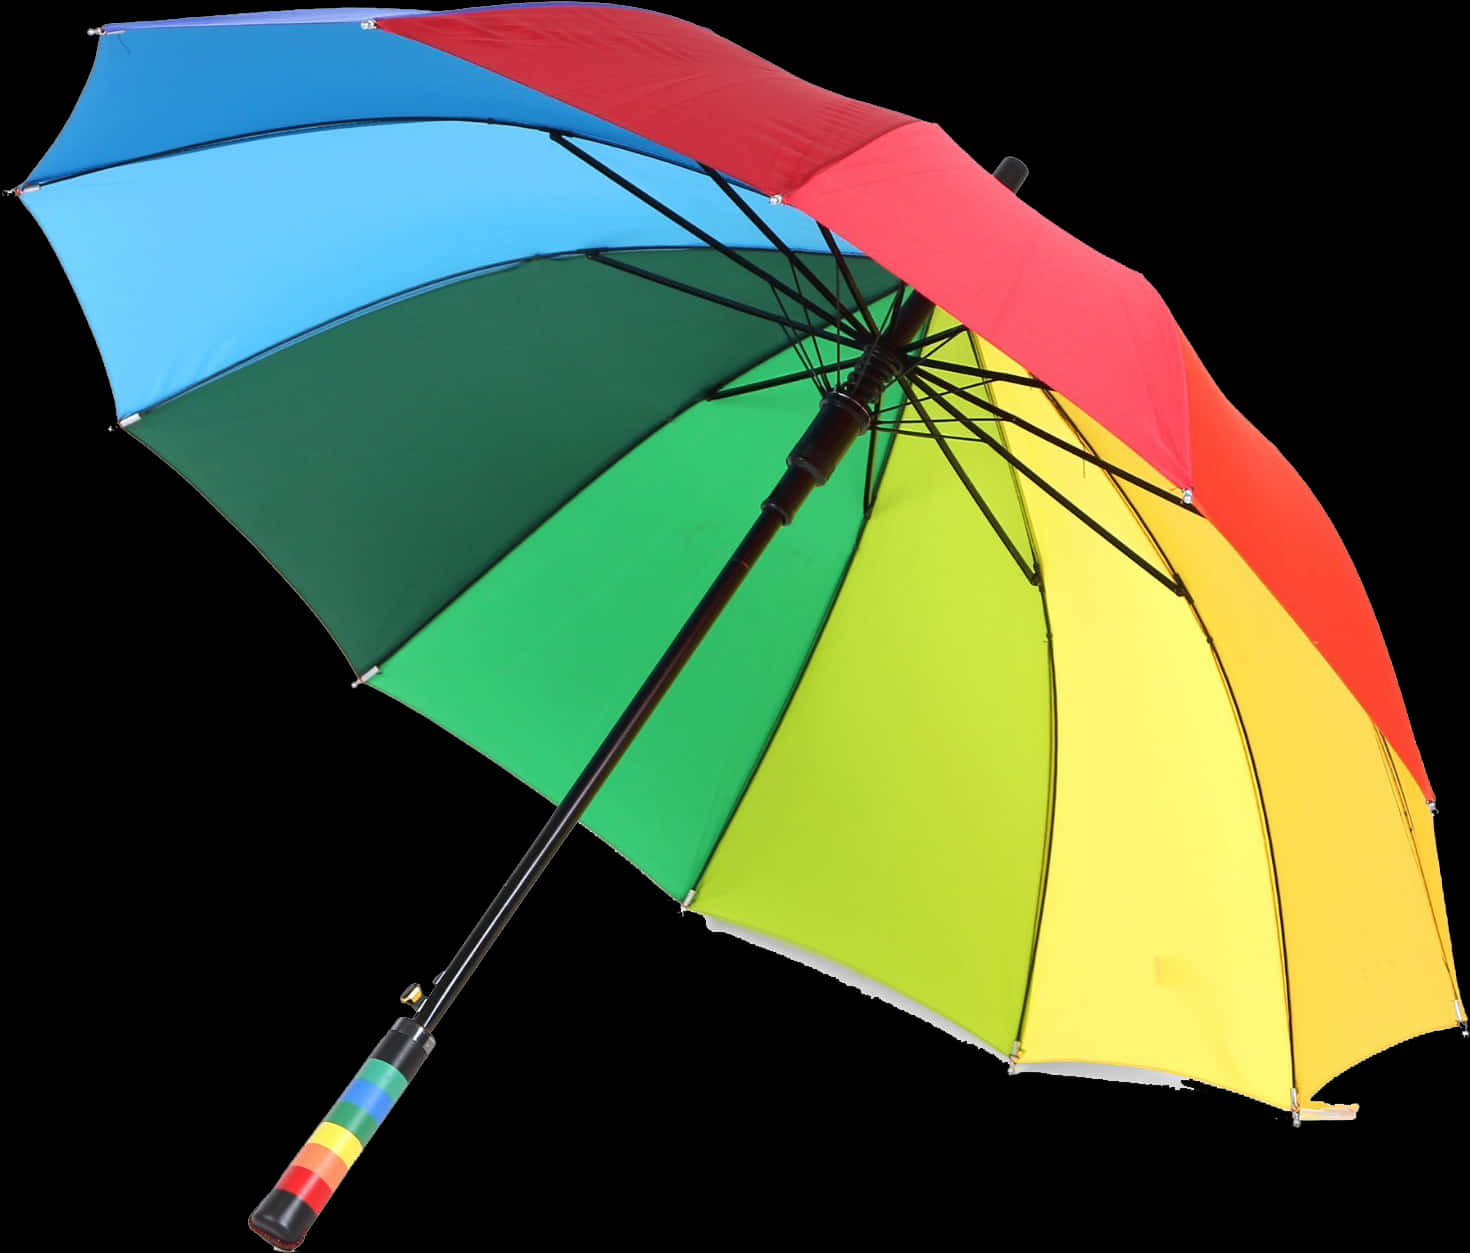 A Rainbow Colored Umbrella With A Black Pole